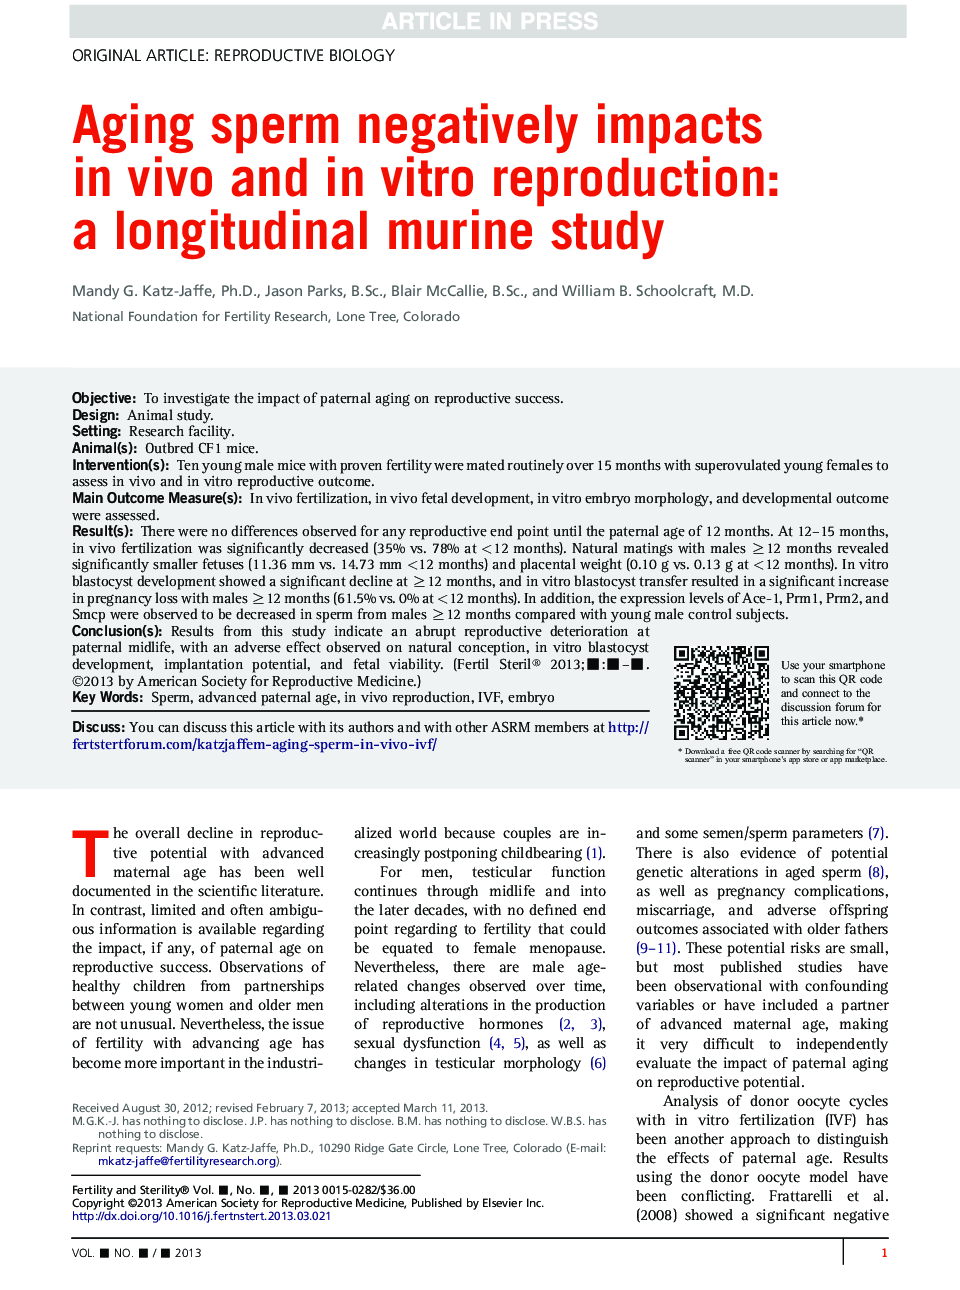 Aging sperm negatively impacts inÂ vivo and inÂ vitro reproduction: a longitudinal murine study